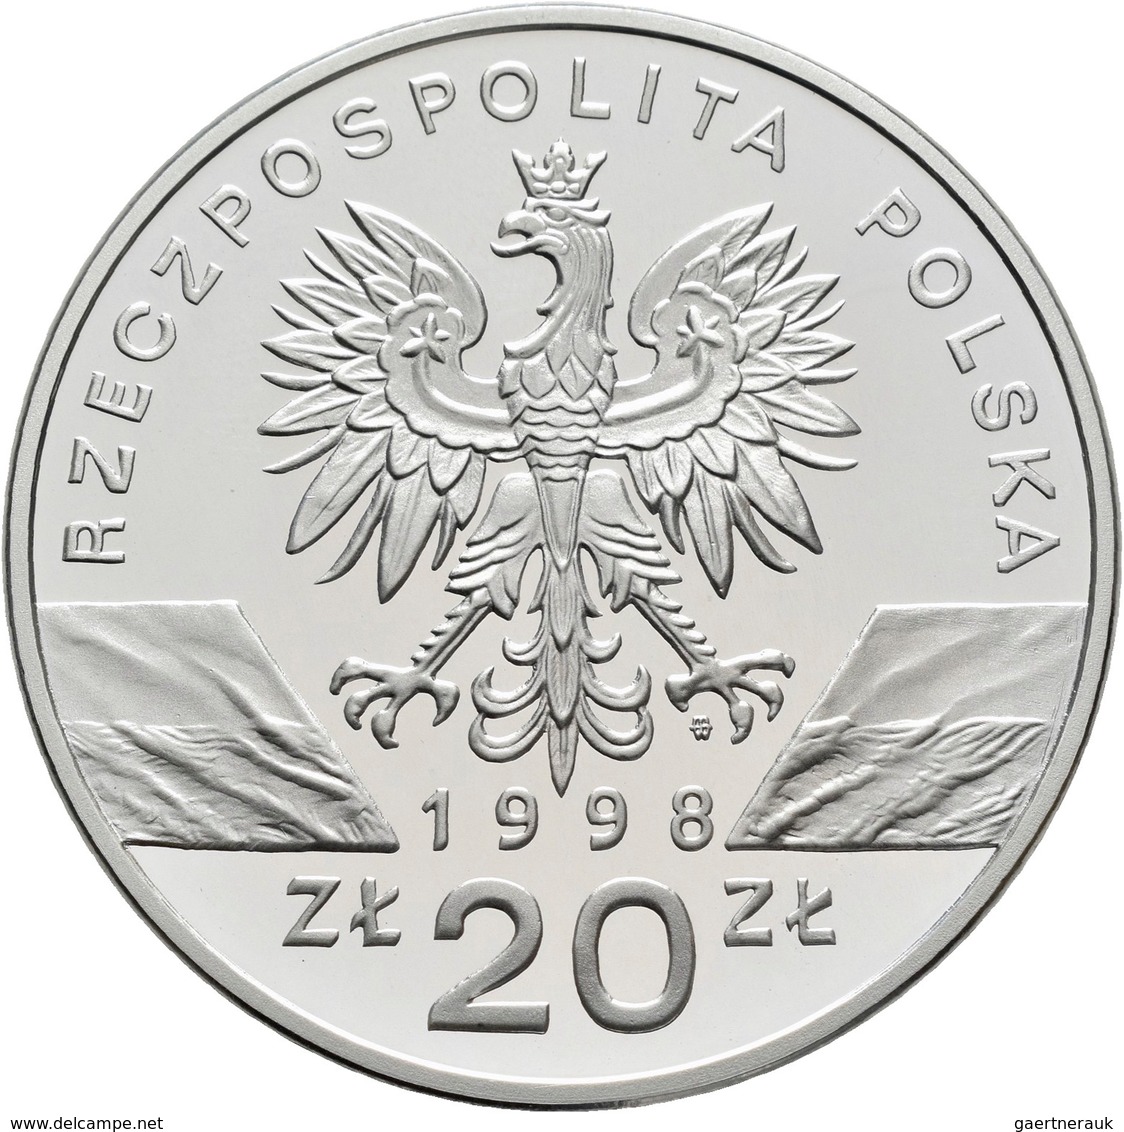 Polen: 20 Zlotych 1998, Kreuzkröte / Ropucha Paskowka / Bufo Calamita, KM# Y 343. Polierte Platte. - Pologne